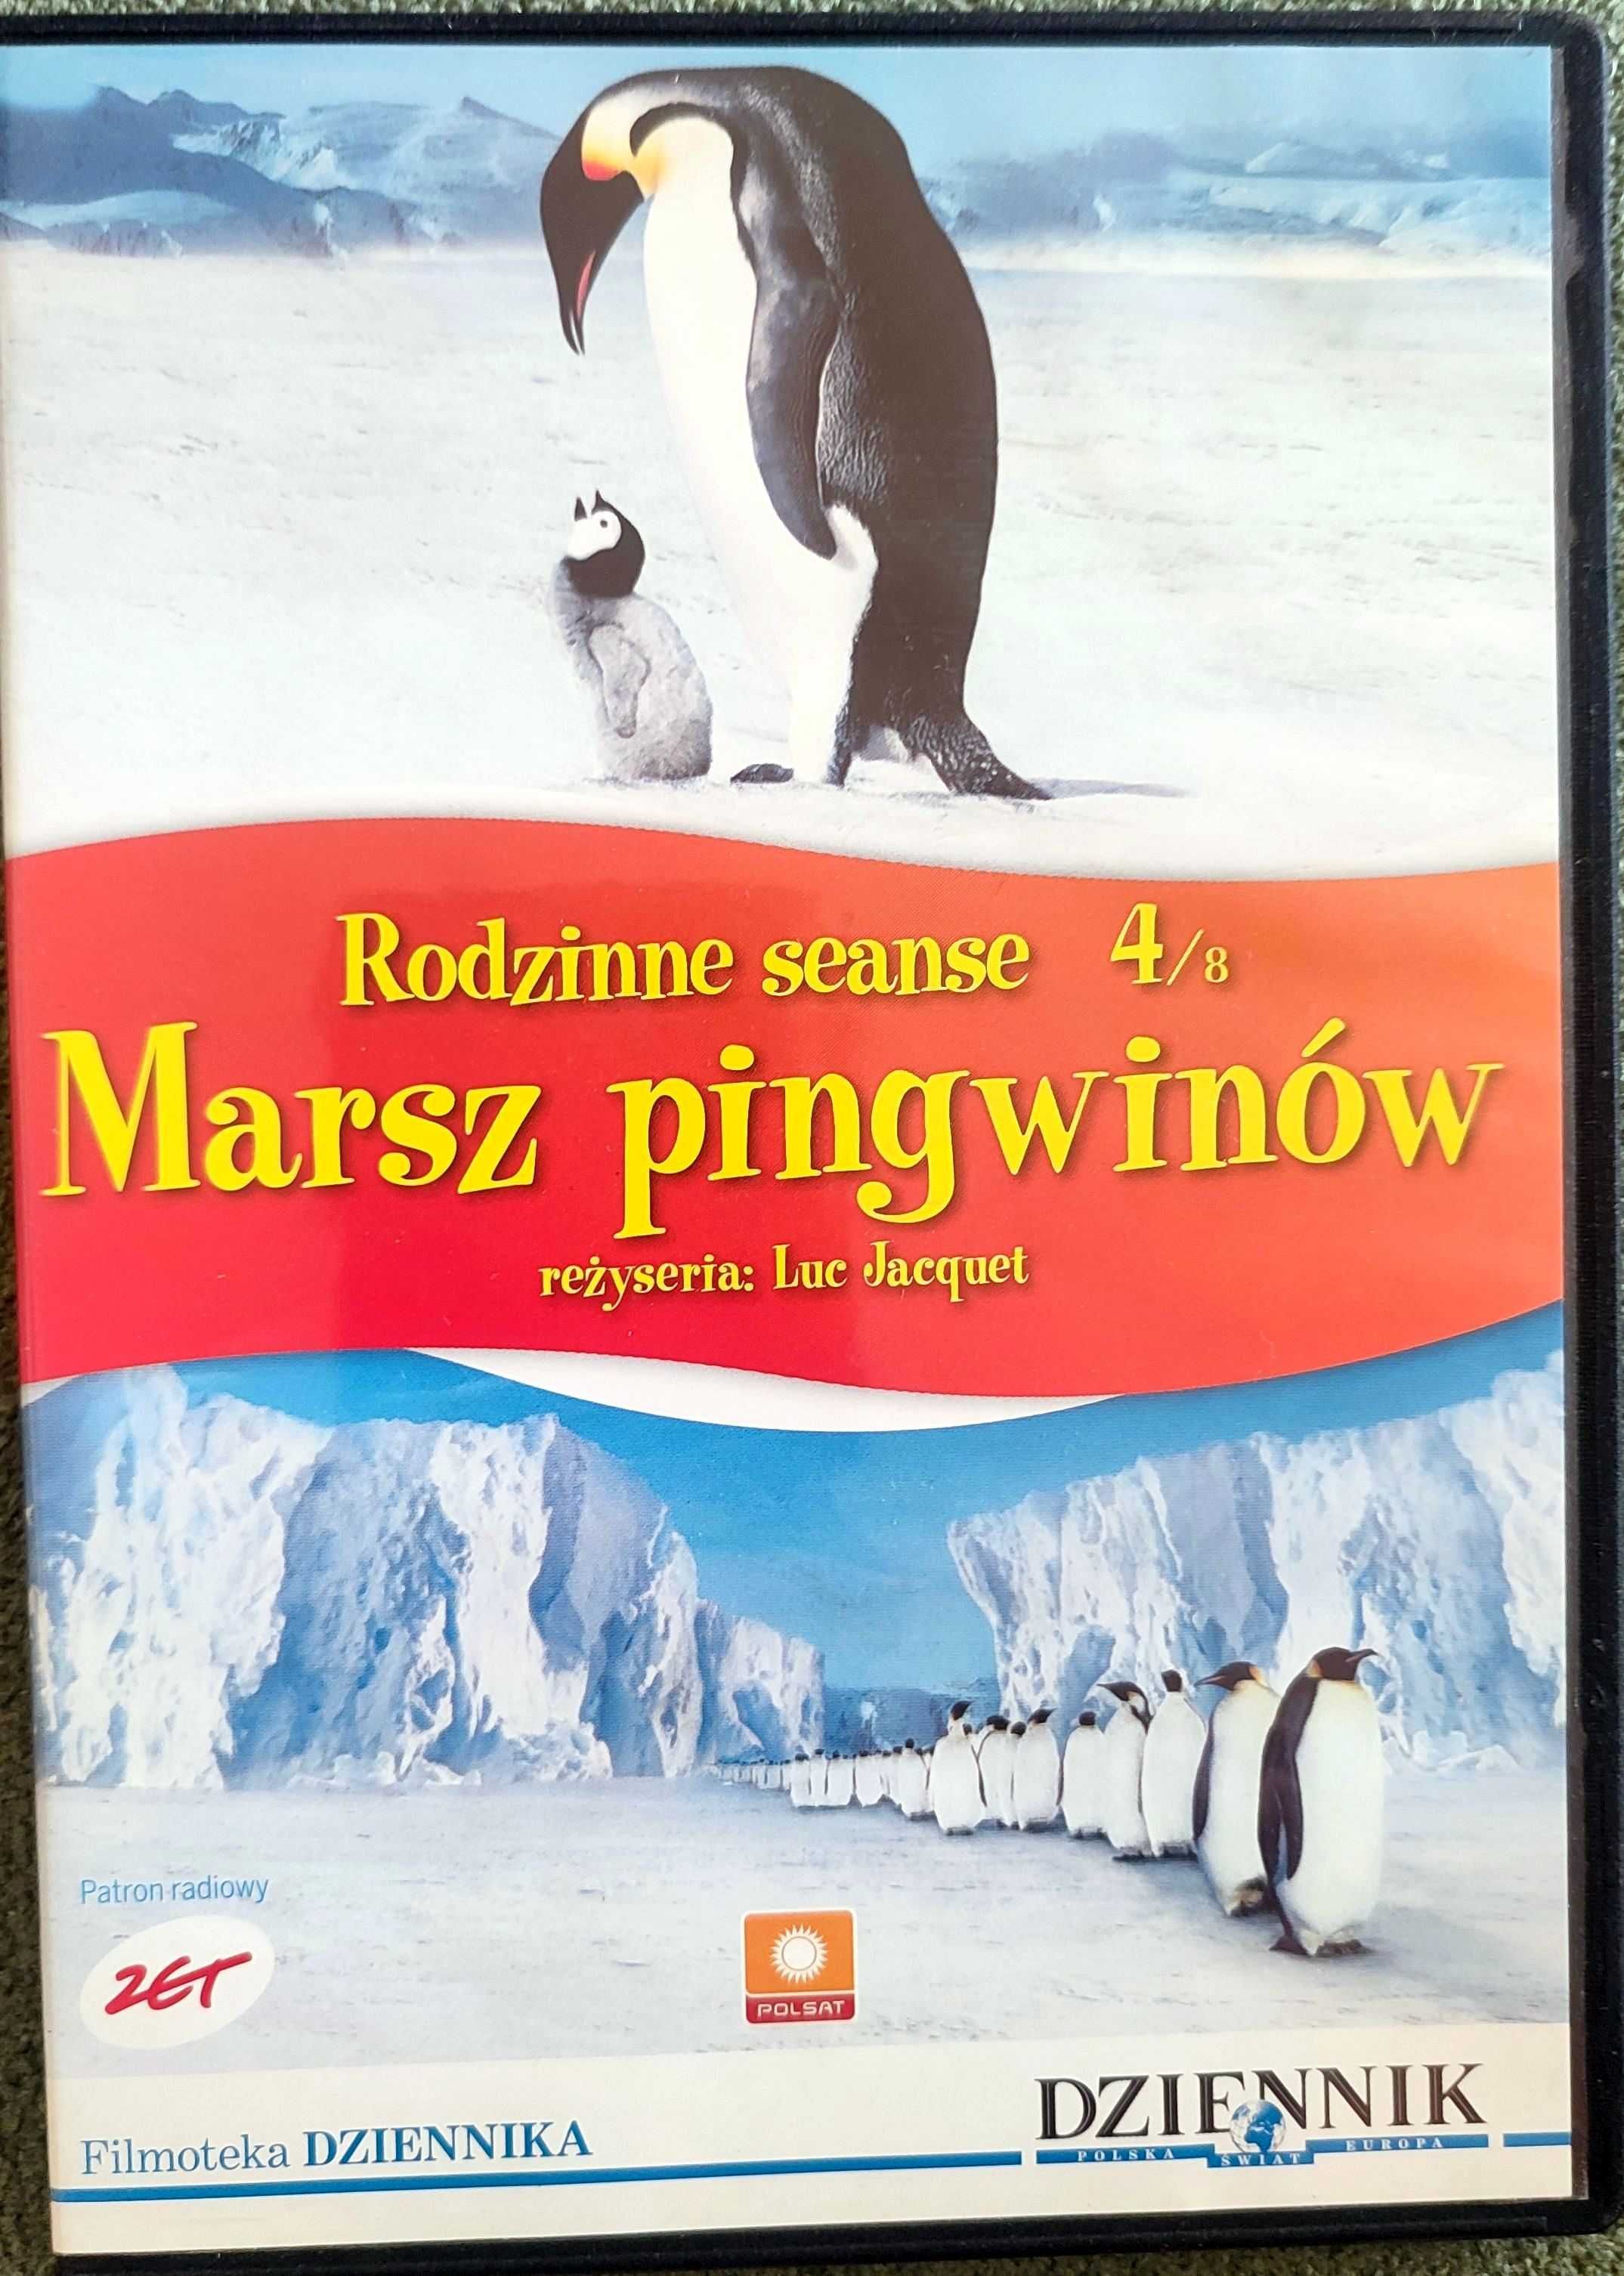 Film DVD Marsz pingwinów. Morgan Freeman